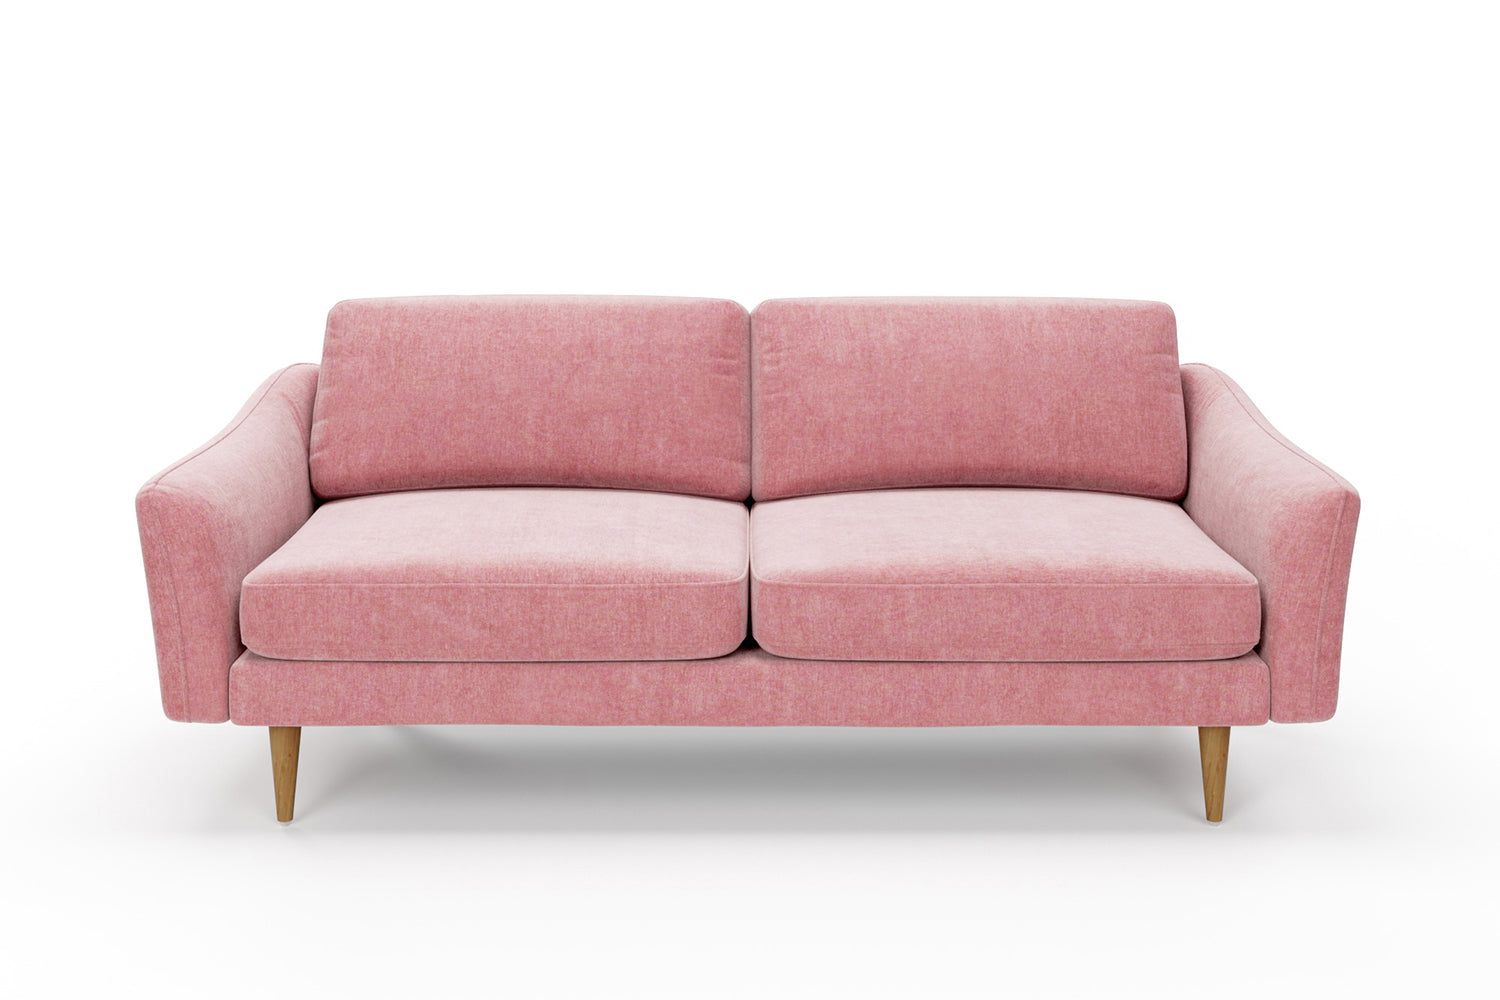 SNUG | The Rebel 3 Seater Sofa in Blush Coral variant_40621891256368